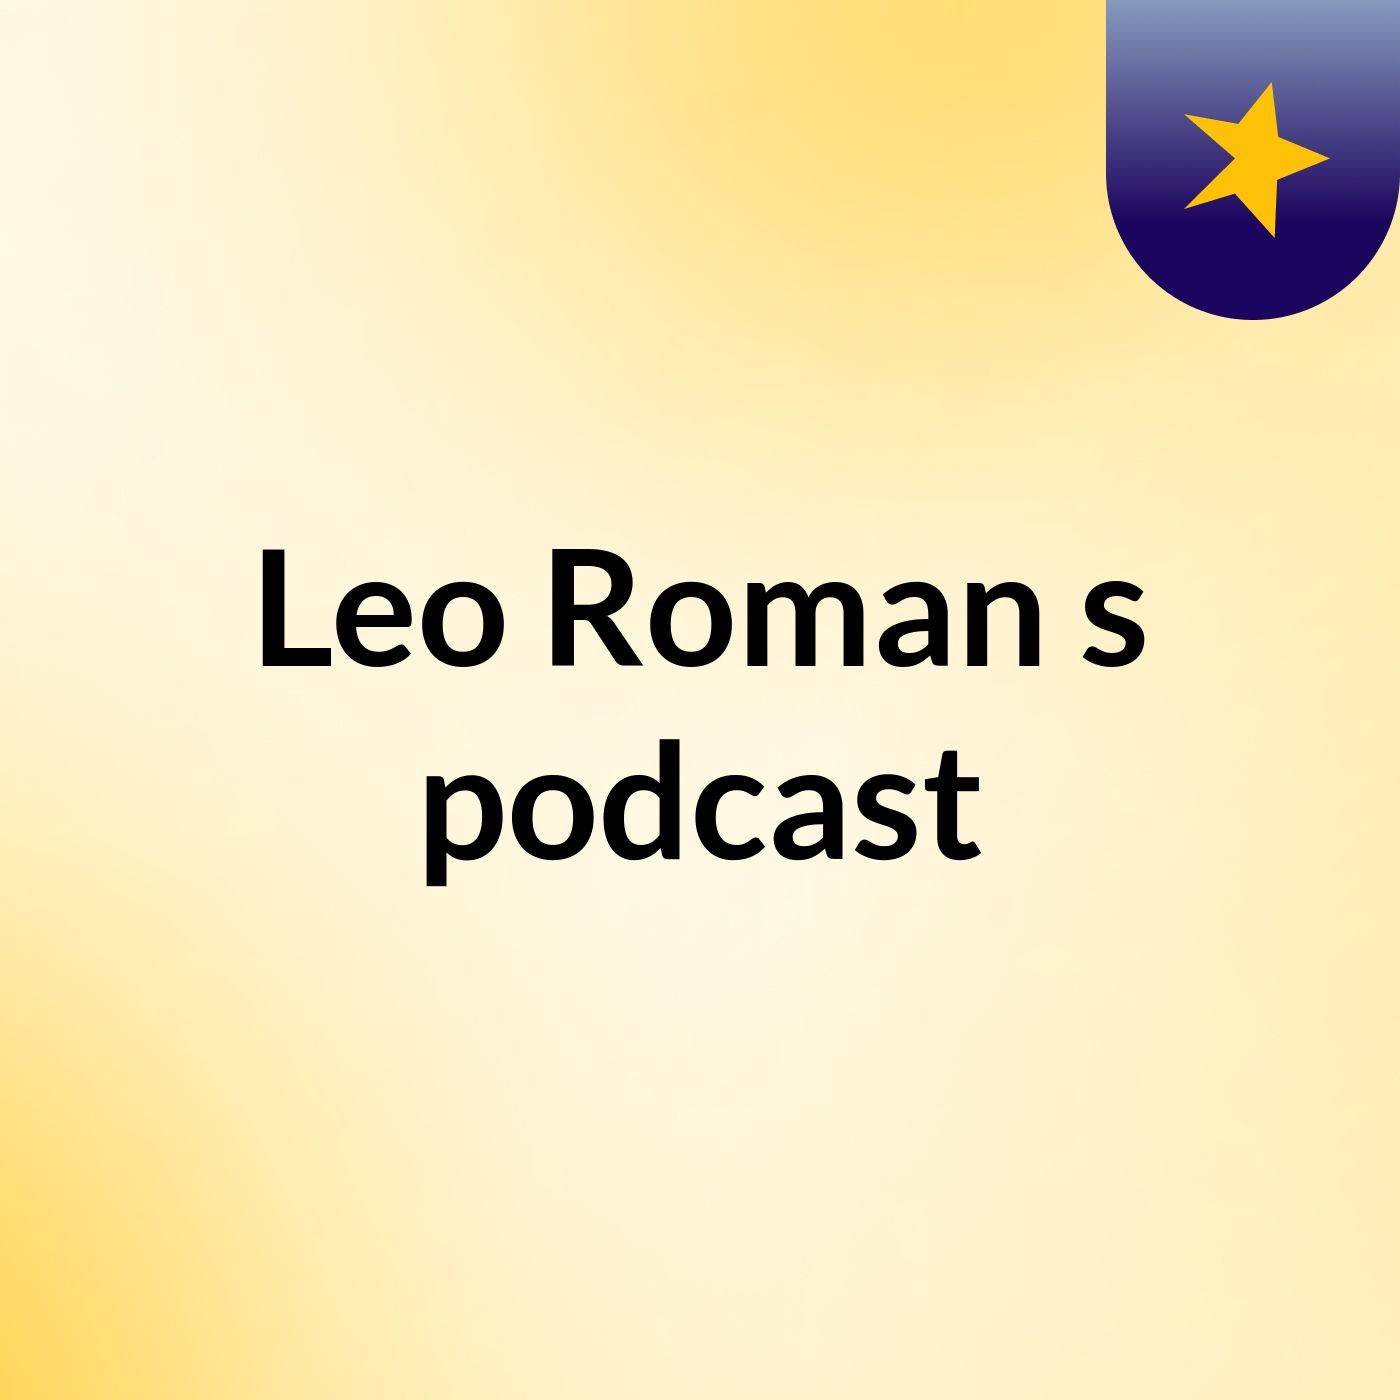 Leo Roman's podcast